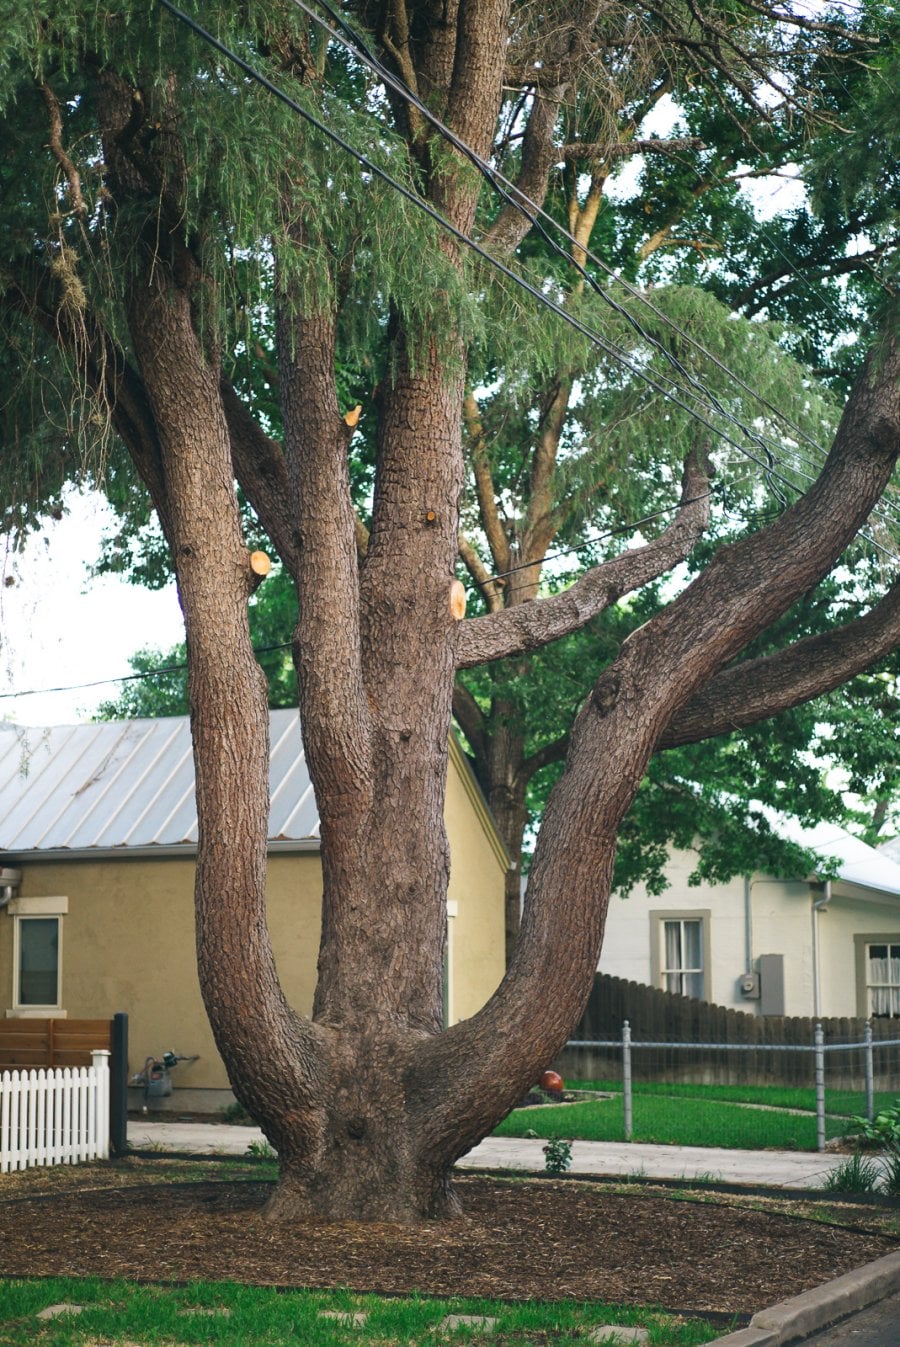 A tree in Fredericksburg, Texas